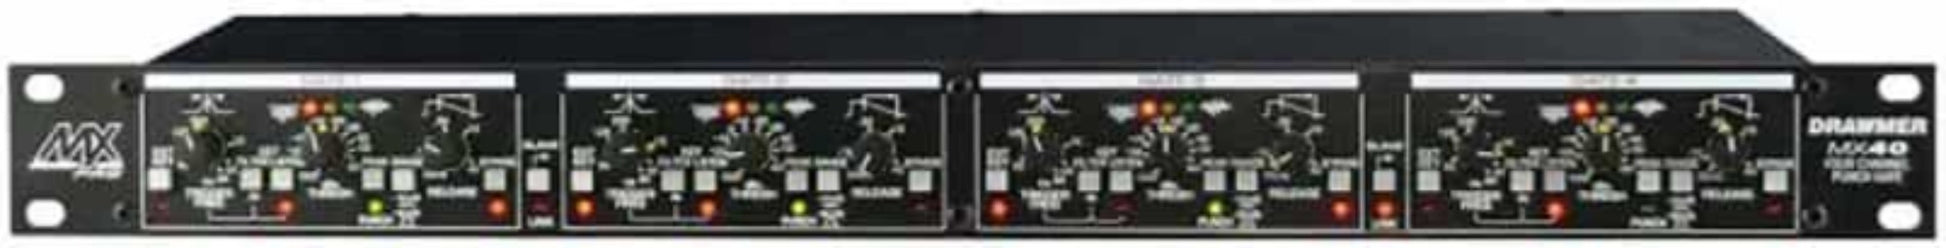 Drawmer MX40 Quad Punch Gate - ProSound and Stage Lighting